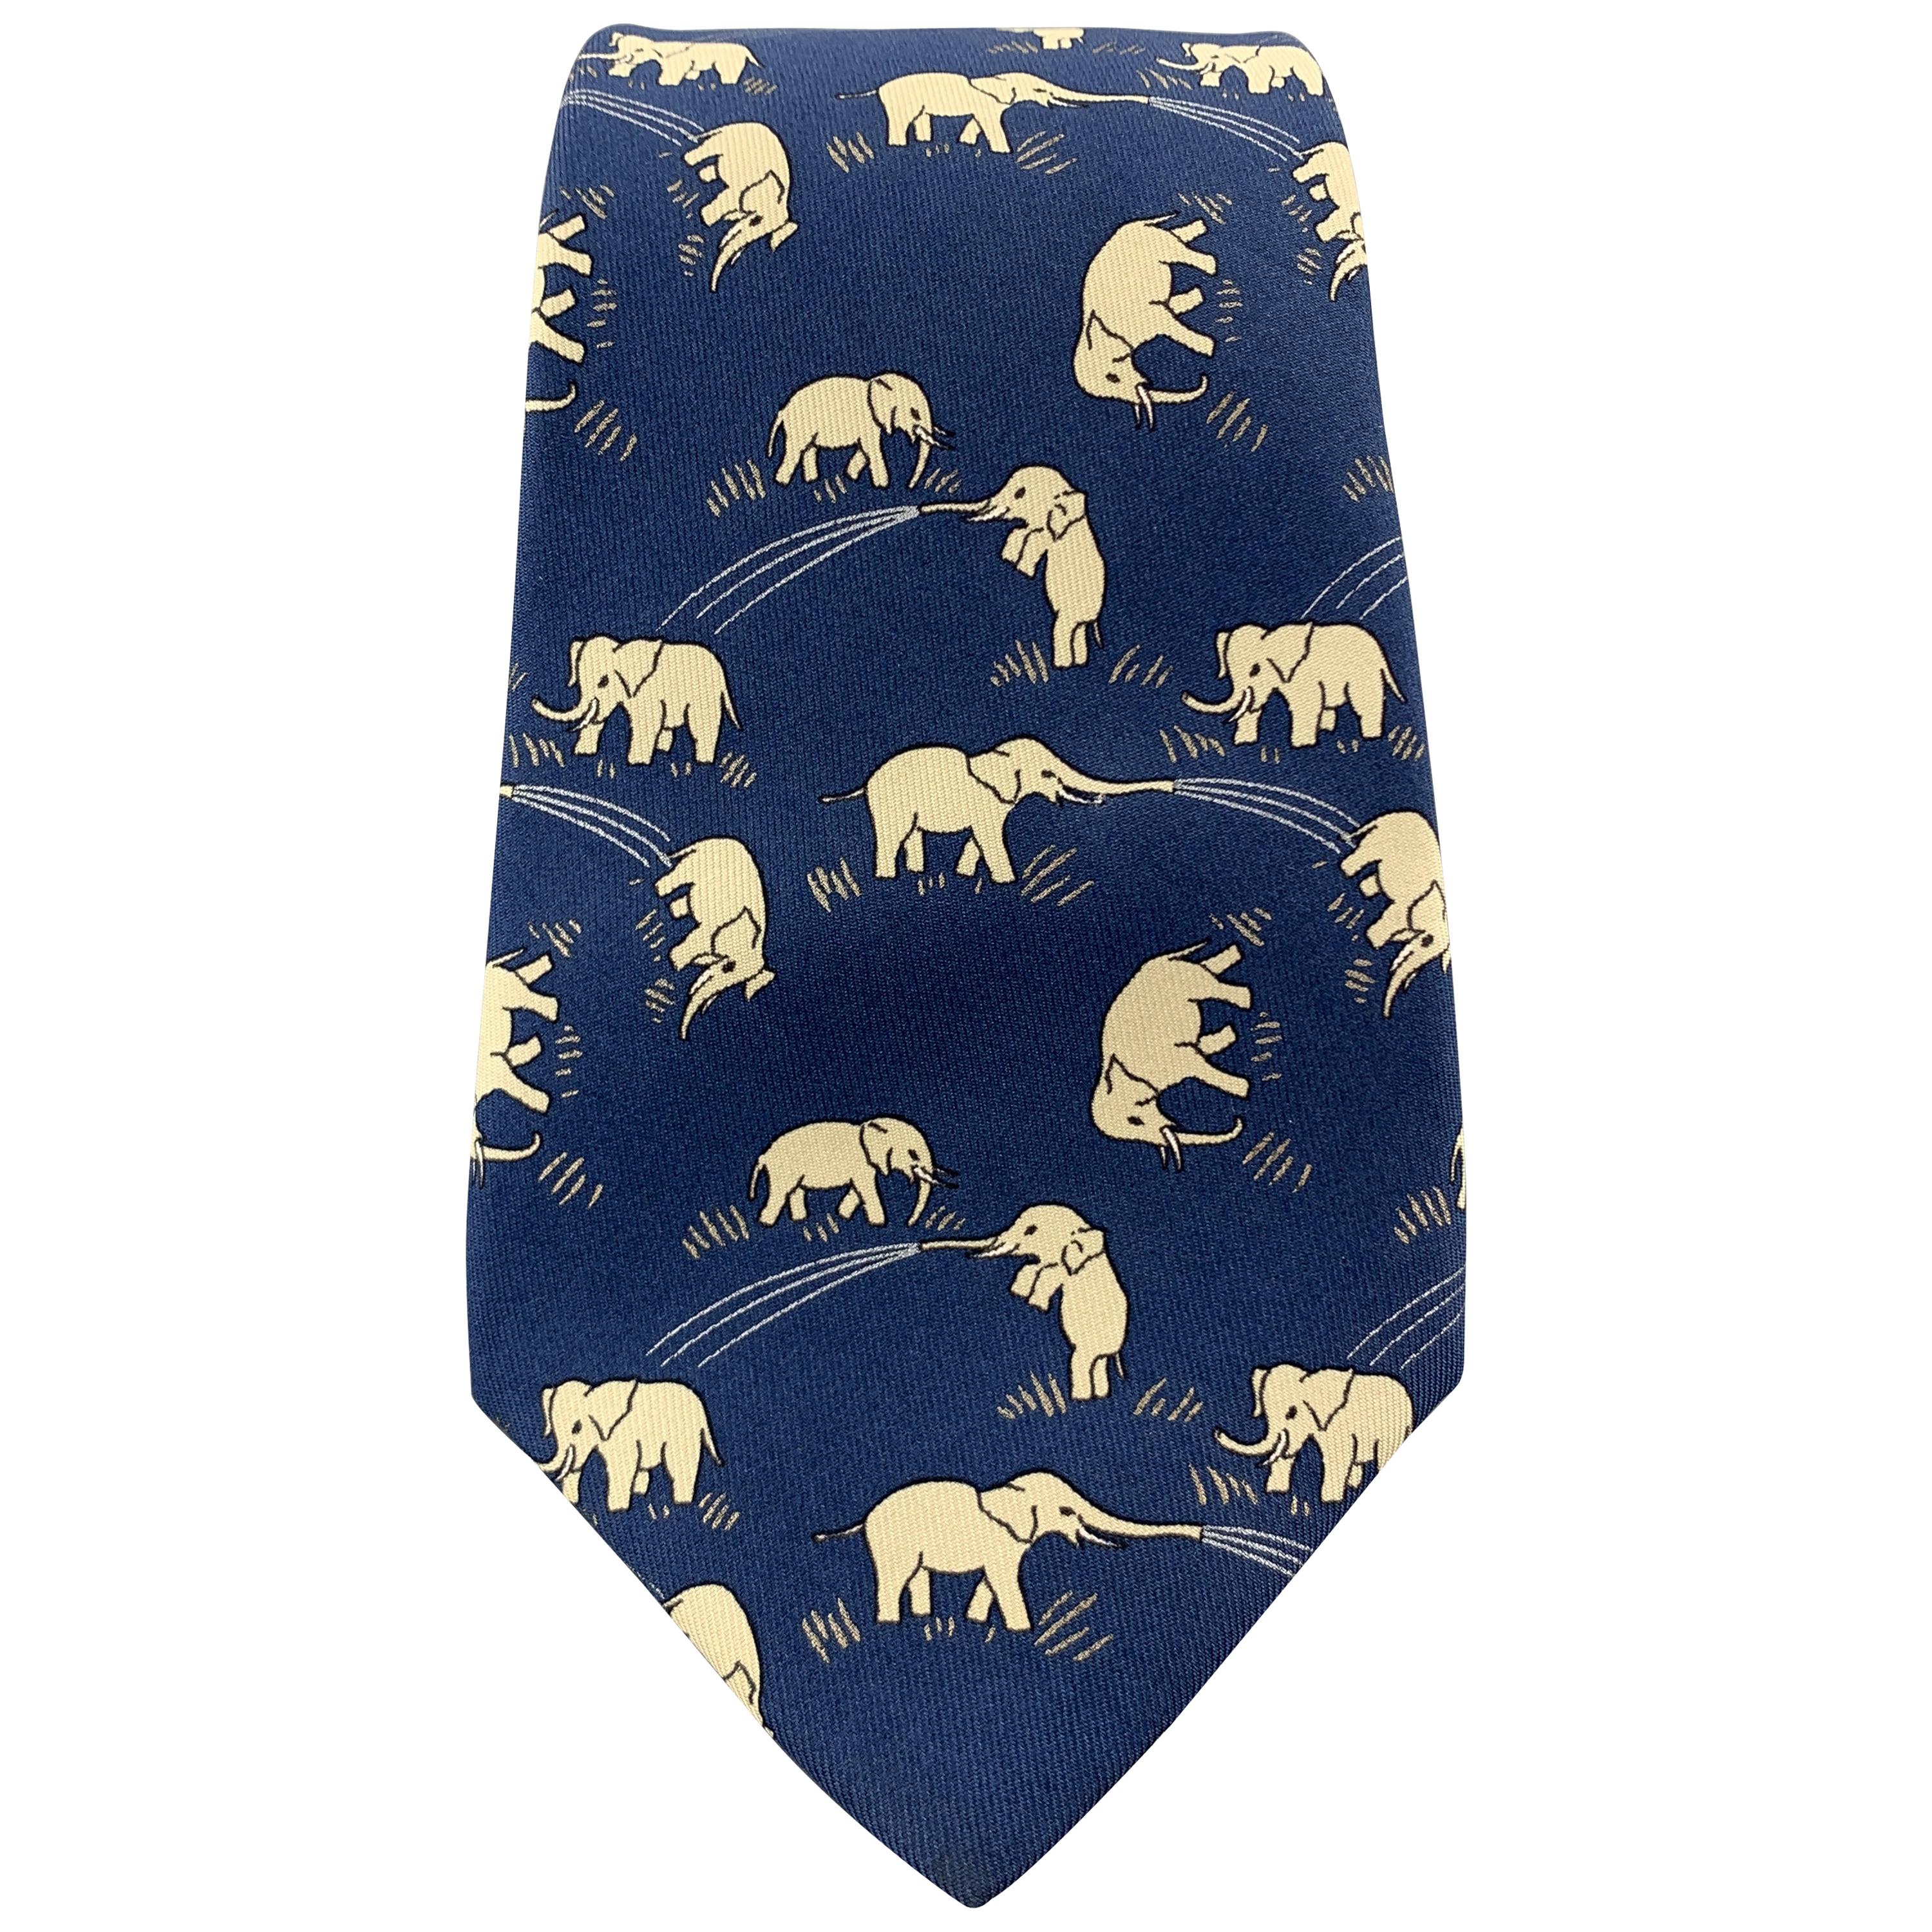 Hermès Vintage Tie Clip in Silver Elephant Pattern Rare at 1stDibs